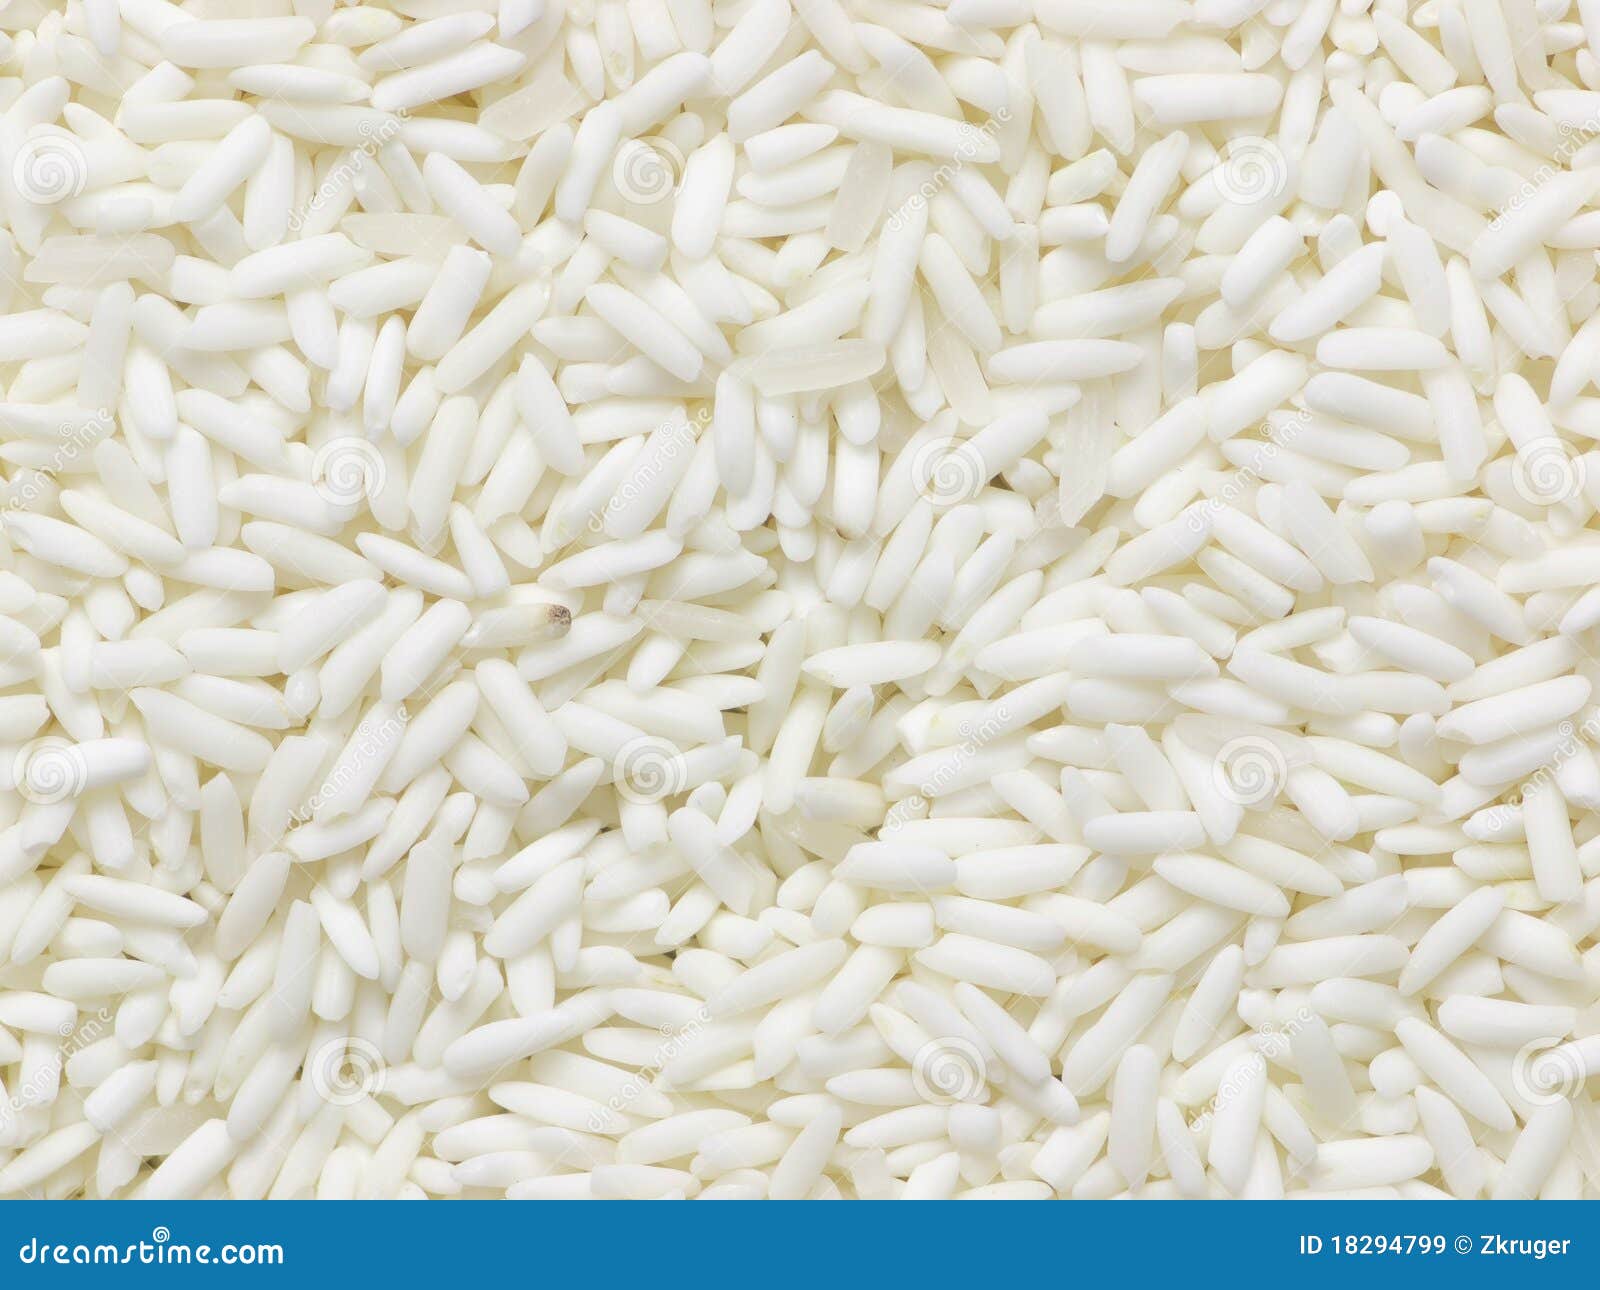 Raw white gflutinous rice stock image. Image of vegetarian - 18294799